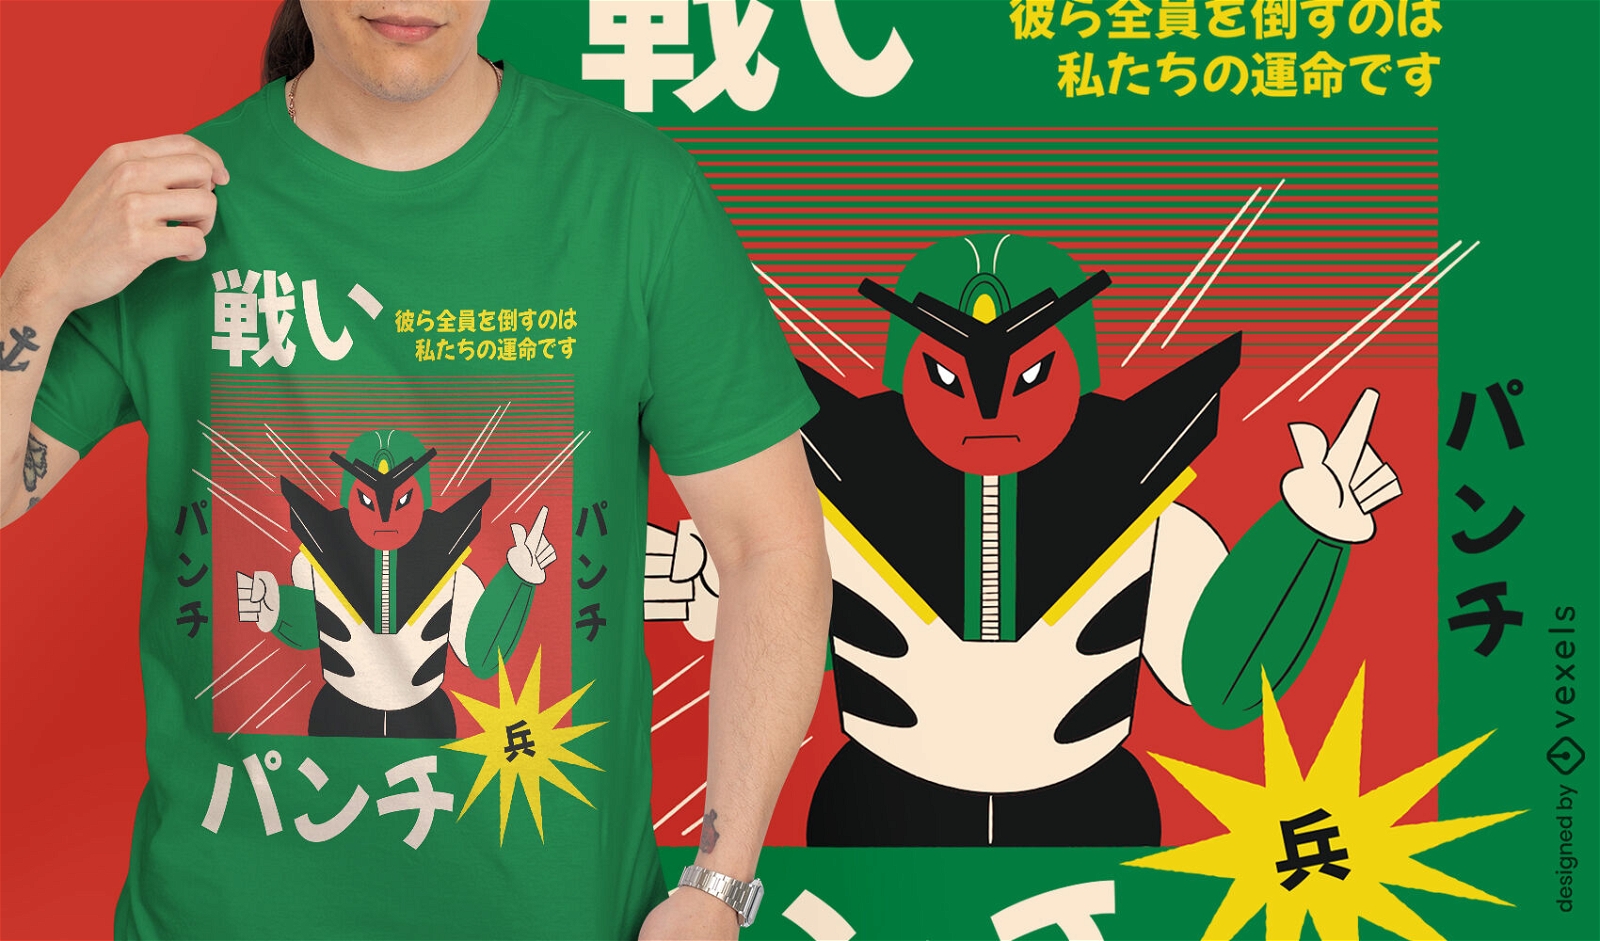 Diseño de camiseta retro de personaje robot japonés.